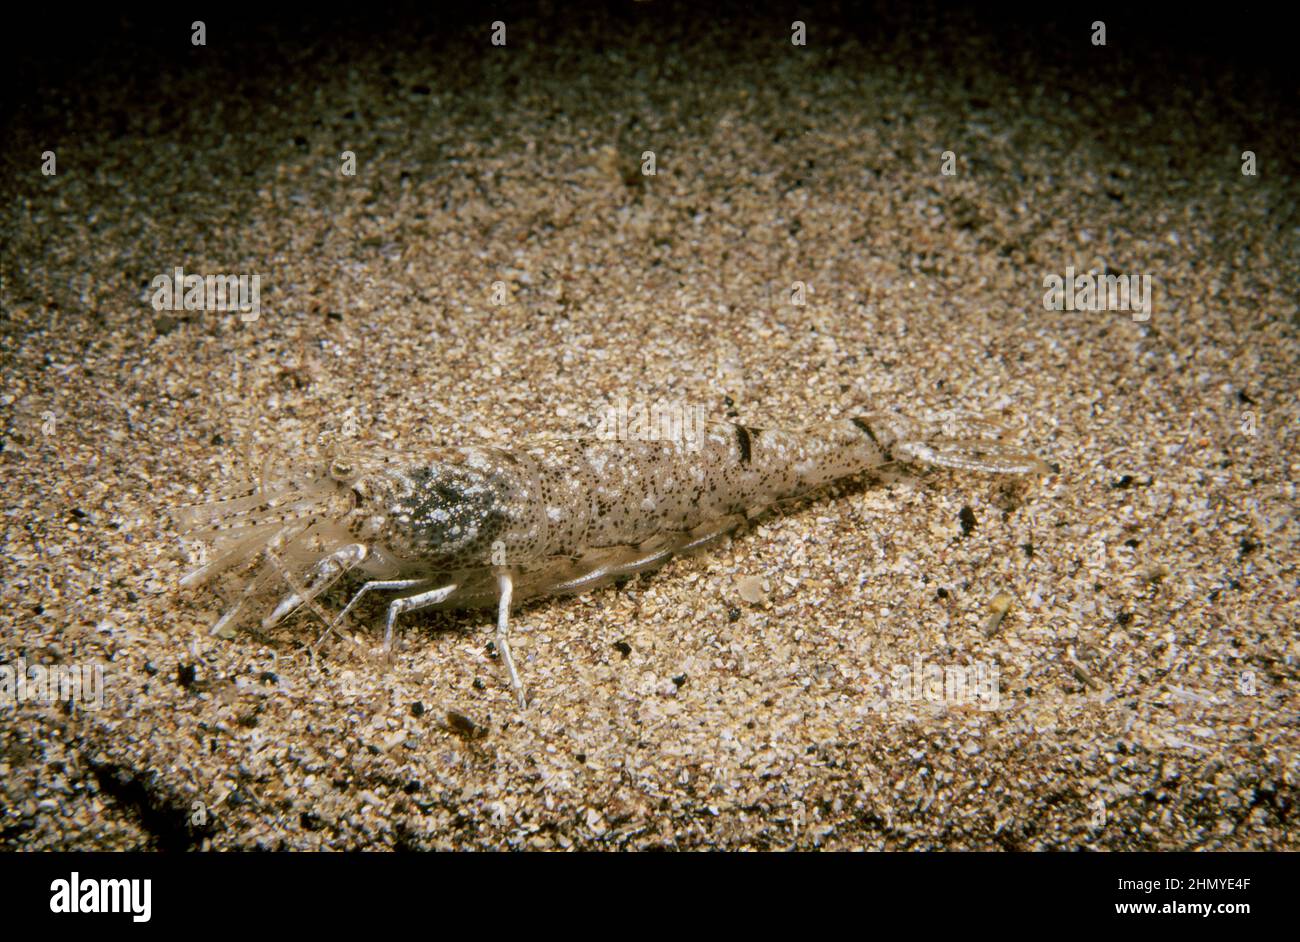 Brown shrimp (Crangon crangon) on a sandy seabed, UK. Stock Photo